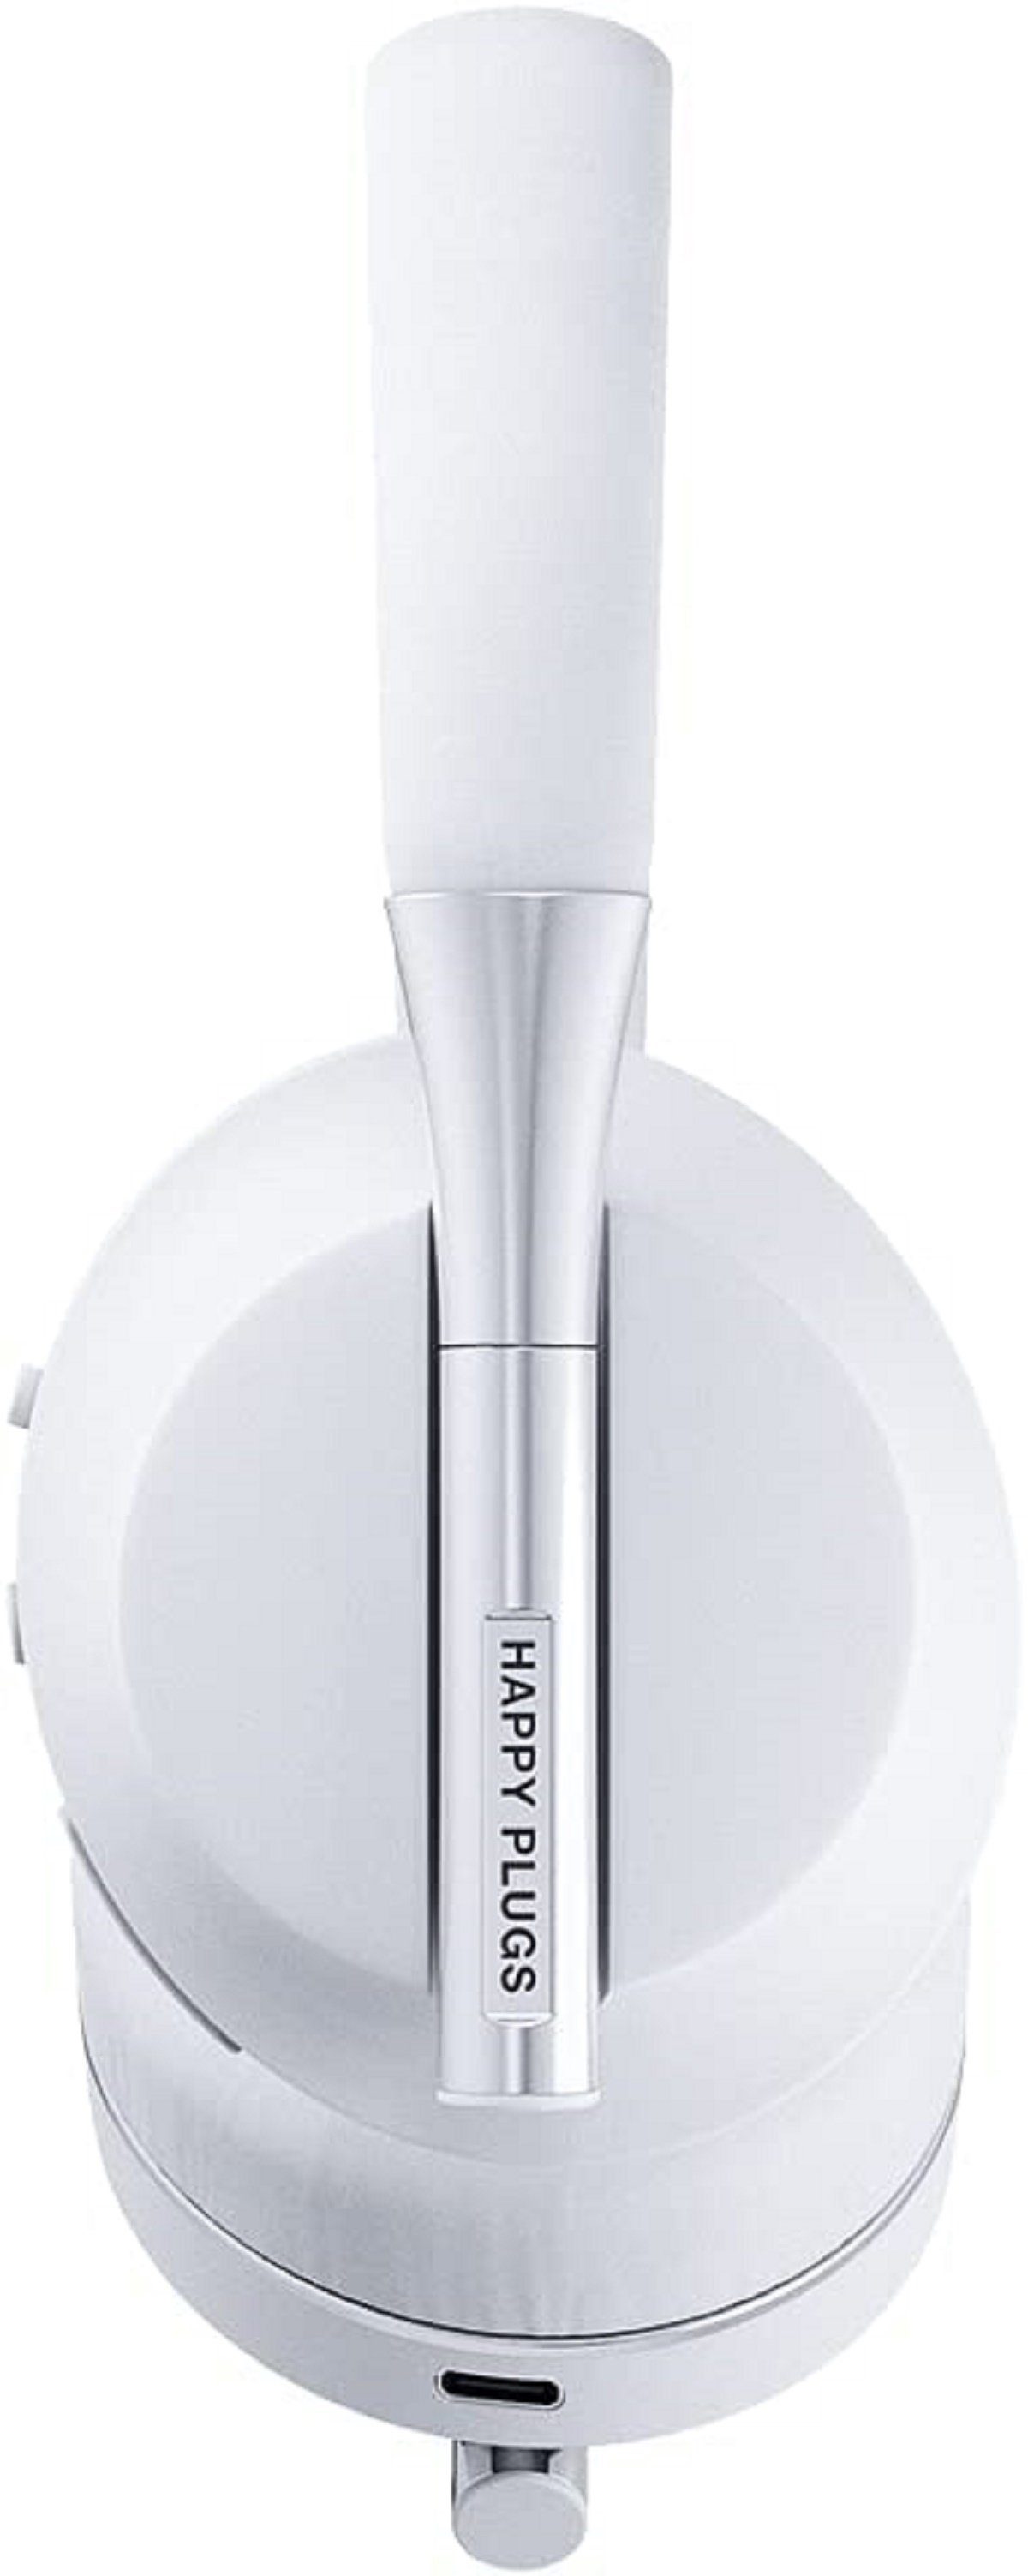 Happy Plugs Wireless Bluetooth Over-Ear-Kopfhörer Headphones 85dB Kabellos